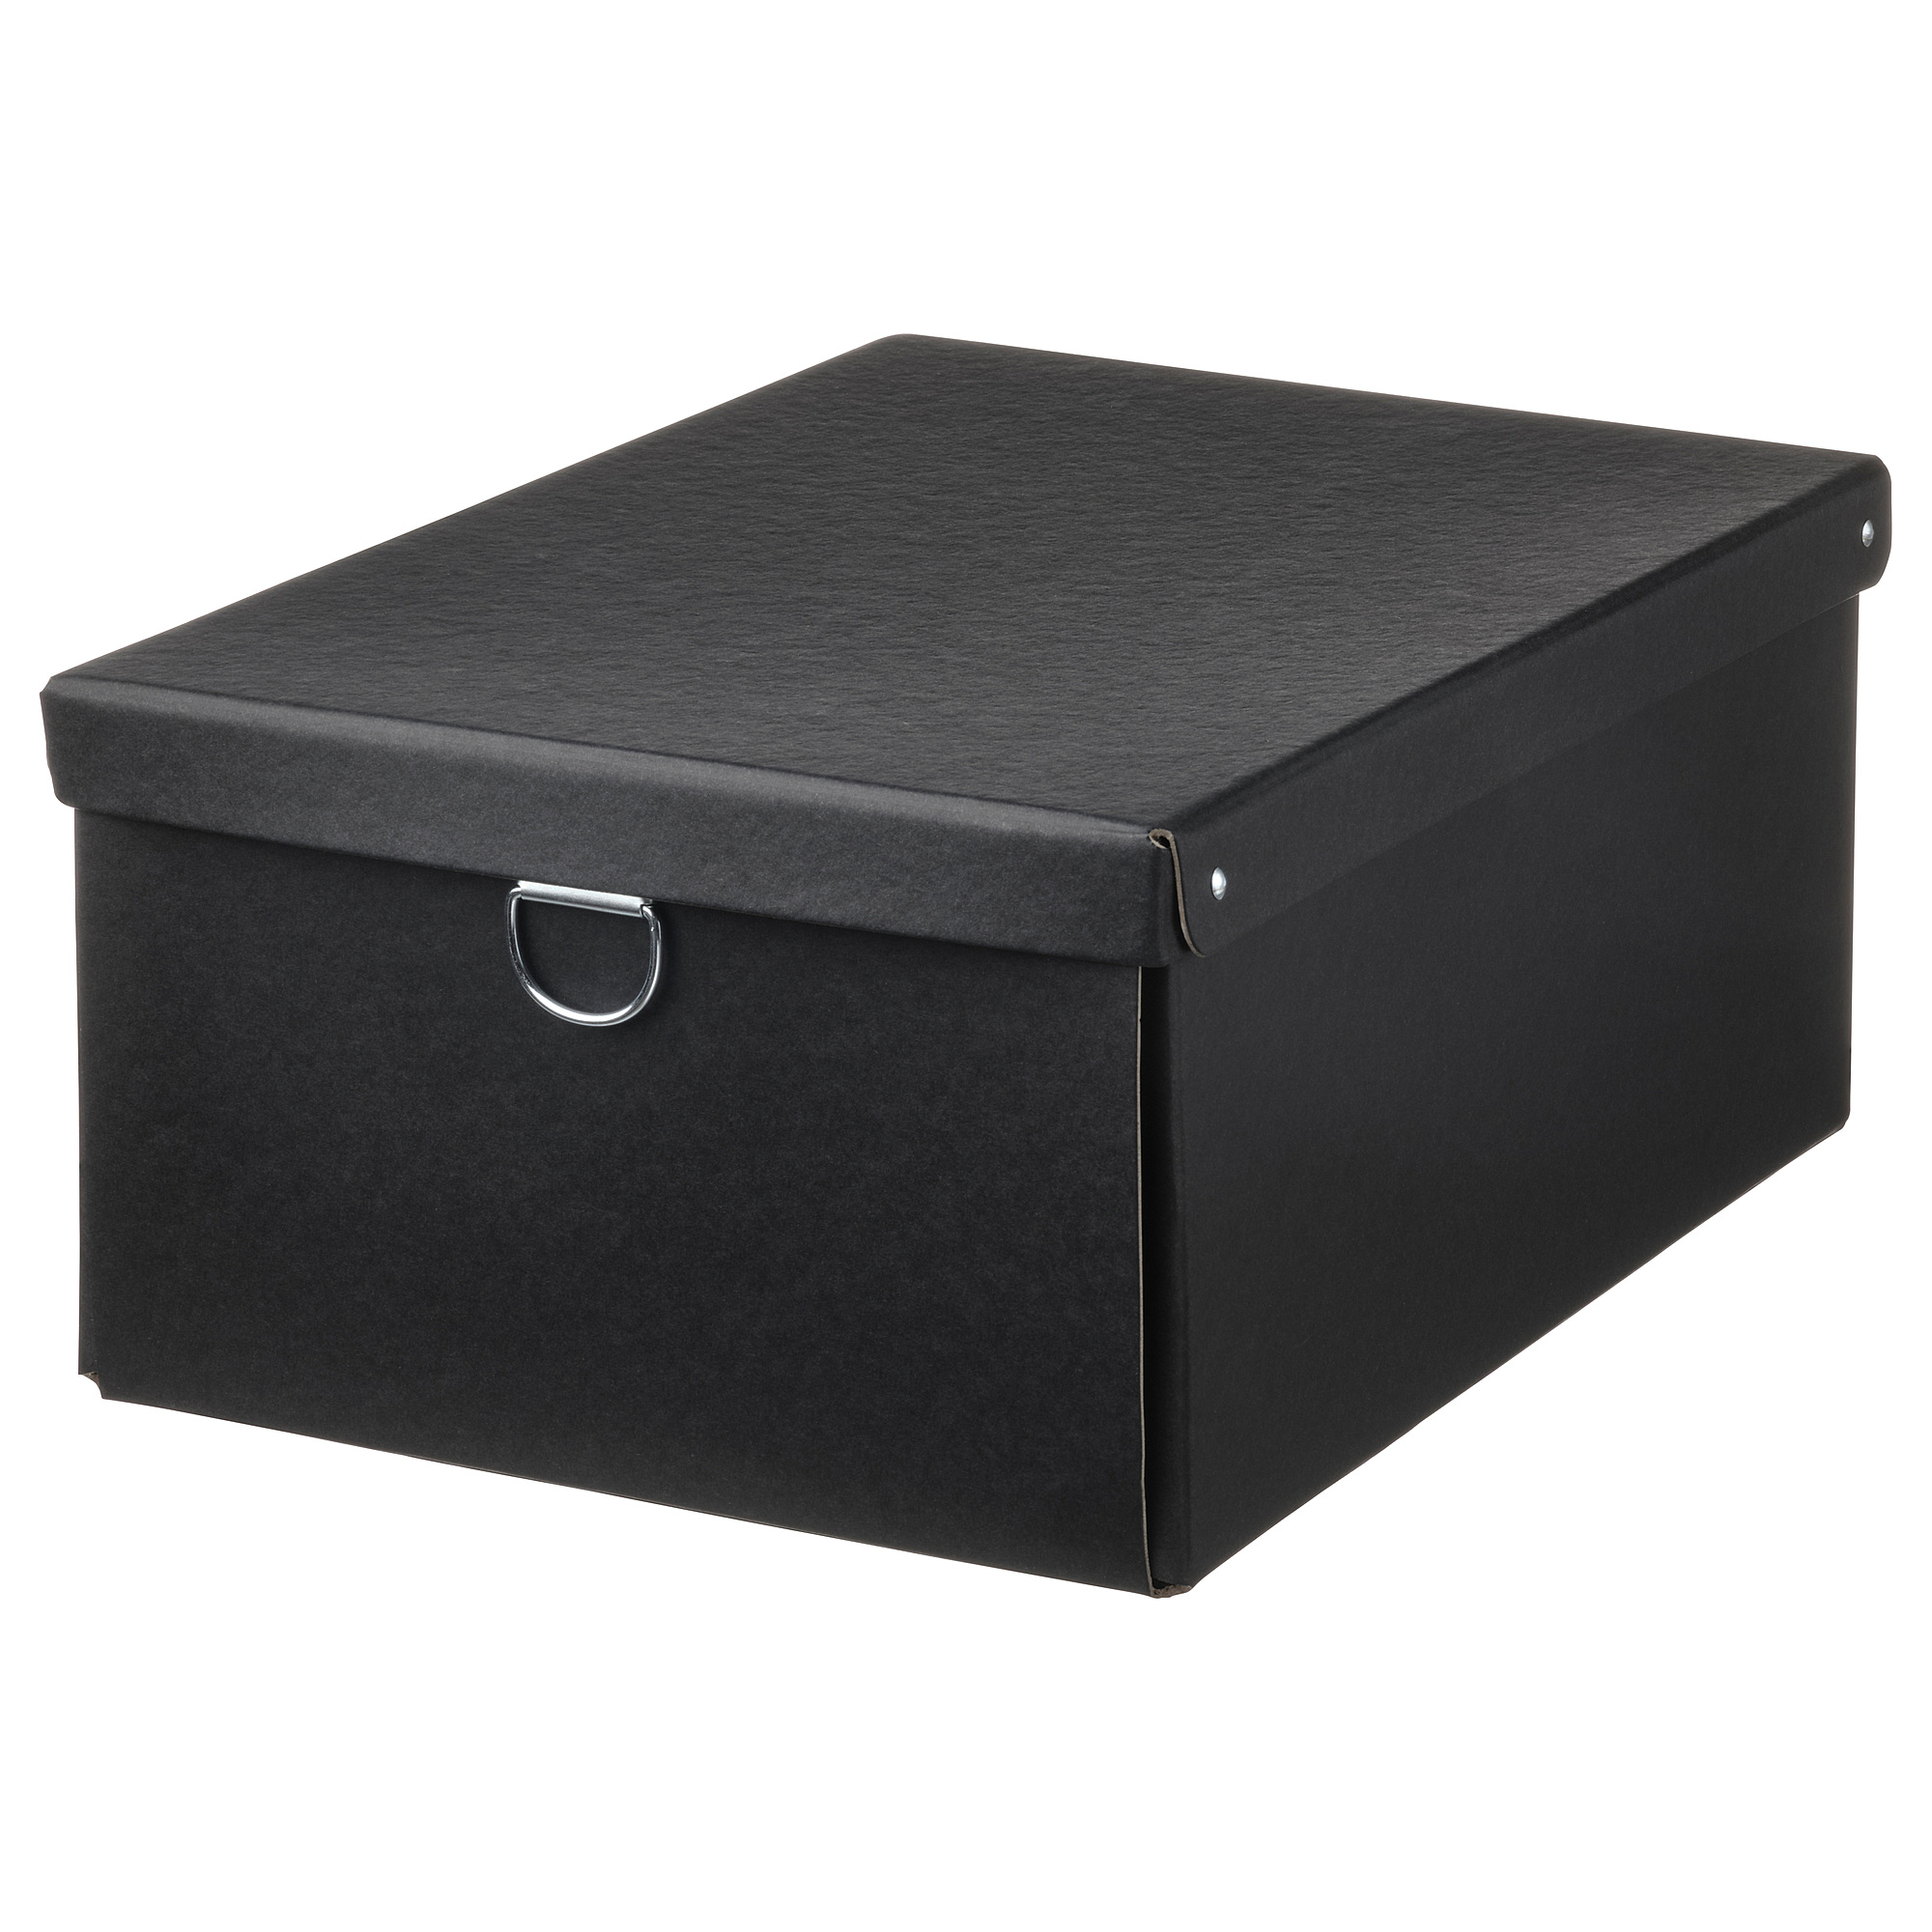 NIMM storage box with lid